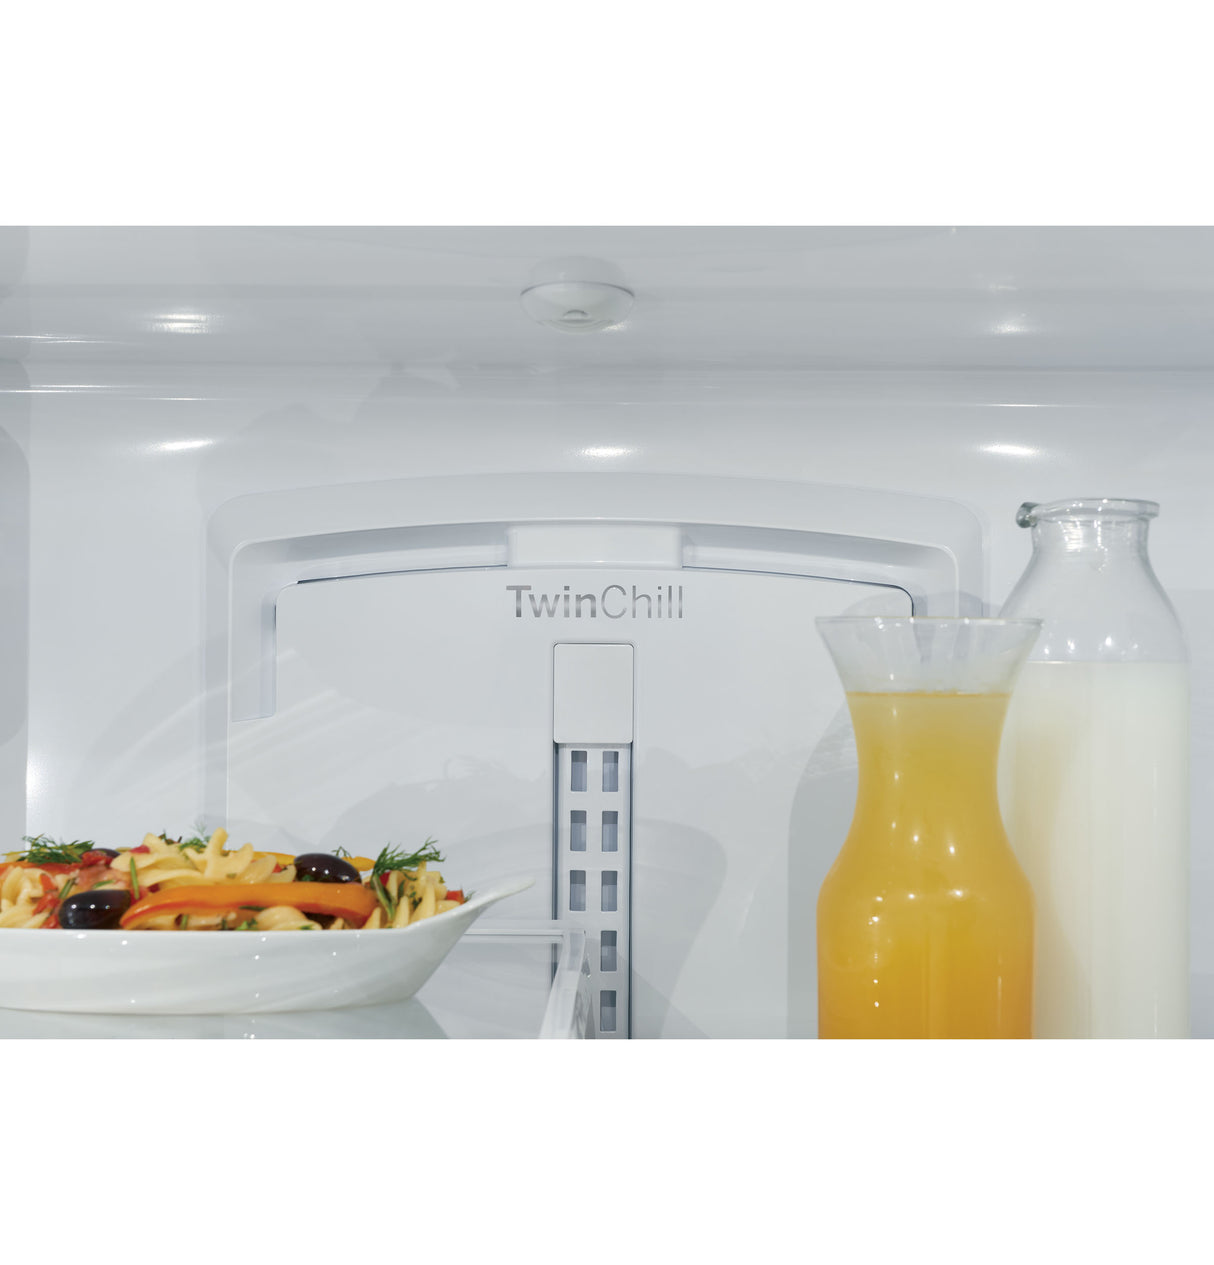 Caf(eback)(TM) ENERGY STAR(R) 23.1 Cu. Ft. Smart Counter-Depth French-Door Refrigerator - (CWE23SP2MS1)